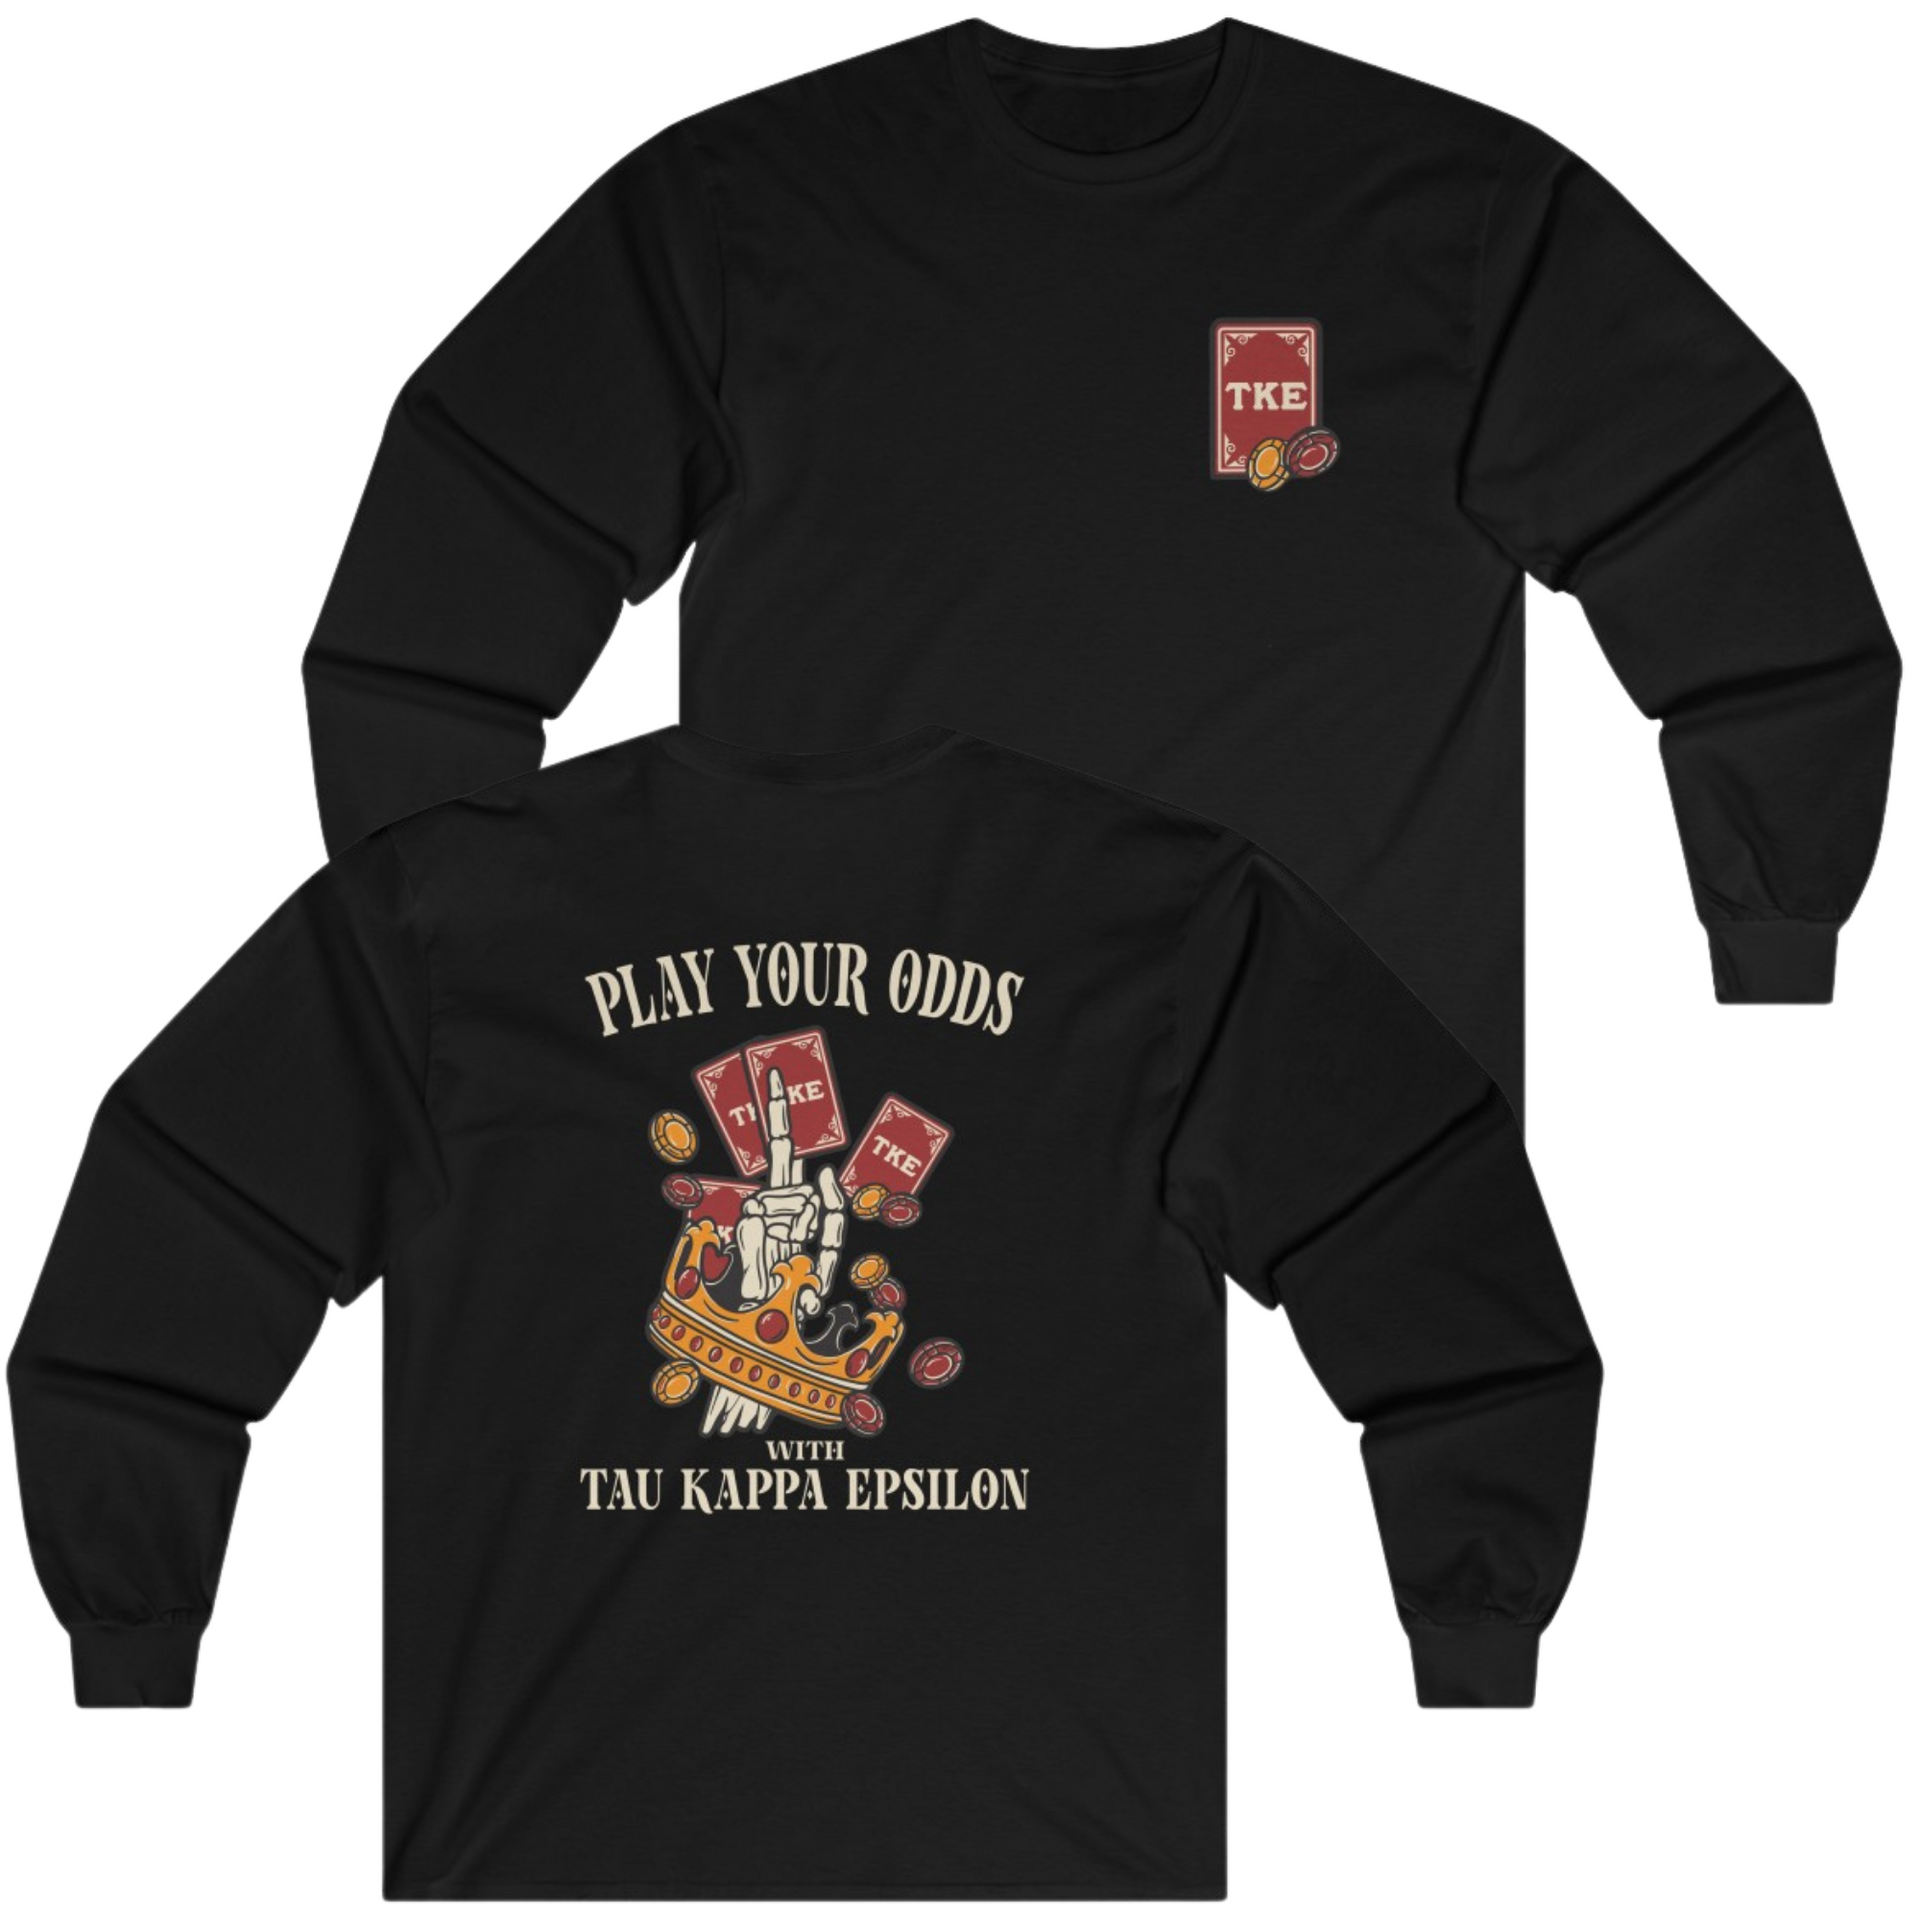 Black Tau Kappa Epsilon Graphic Long Sleeve T-Shirt | Play Your Odds | Tau Kappa Epsilon Fraternity